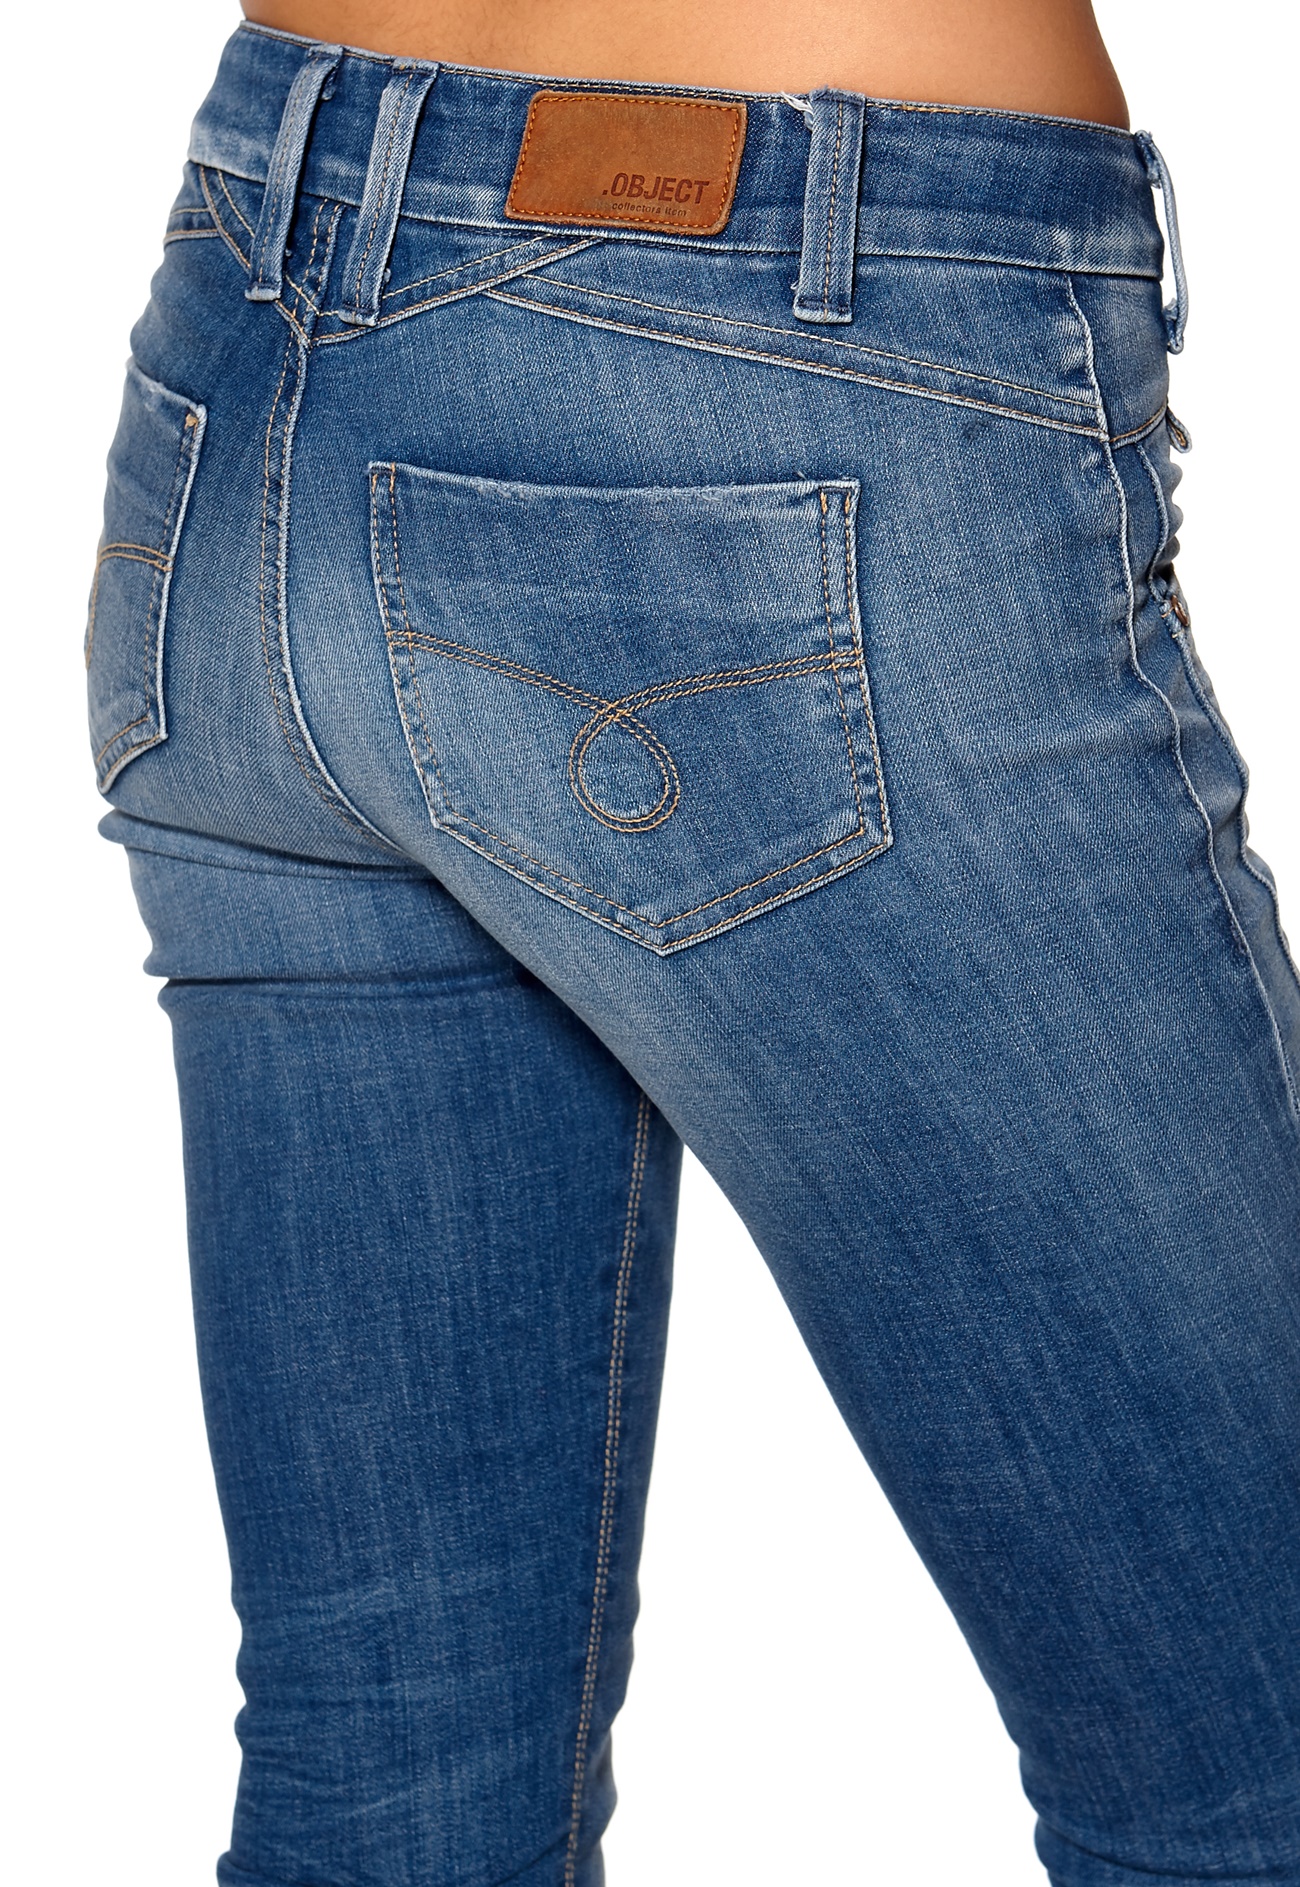 OBJECT Up-c slim jeans Medium Blue Denim - Bubbleroom